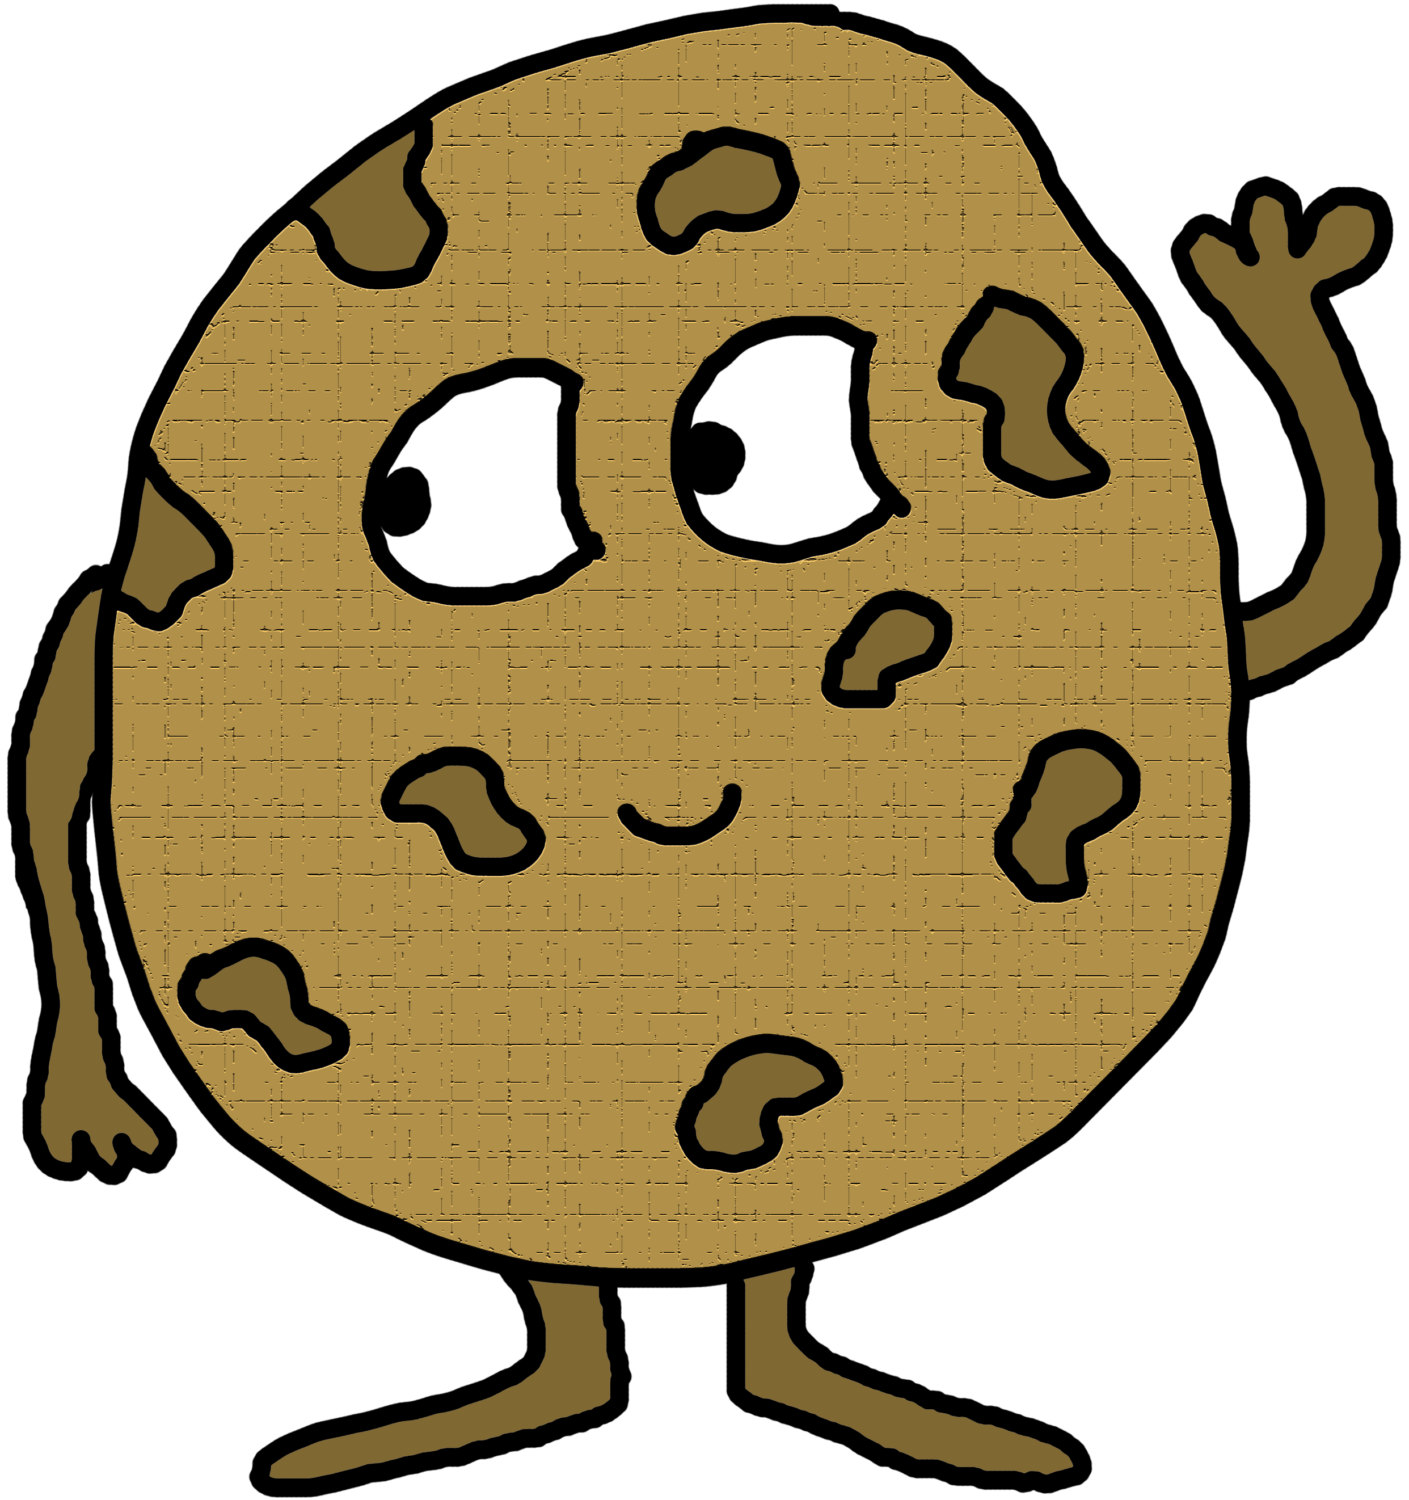 cookie clipart - Cookies Clip Art